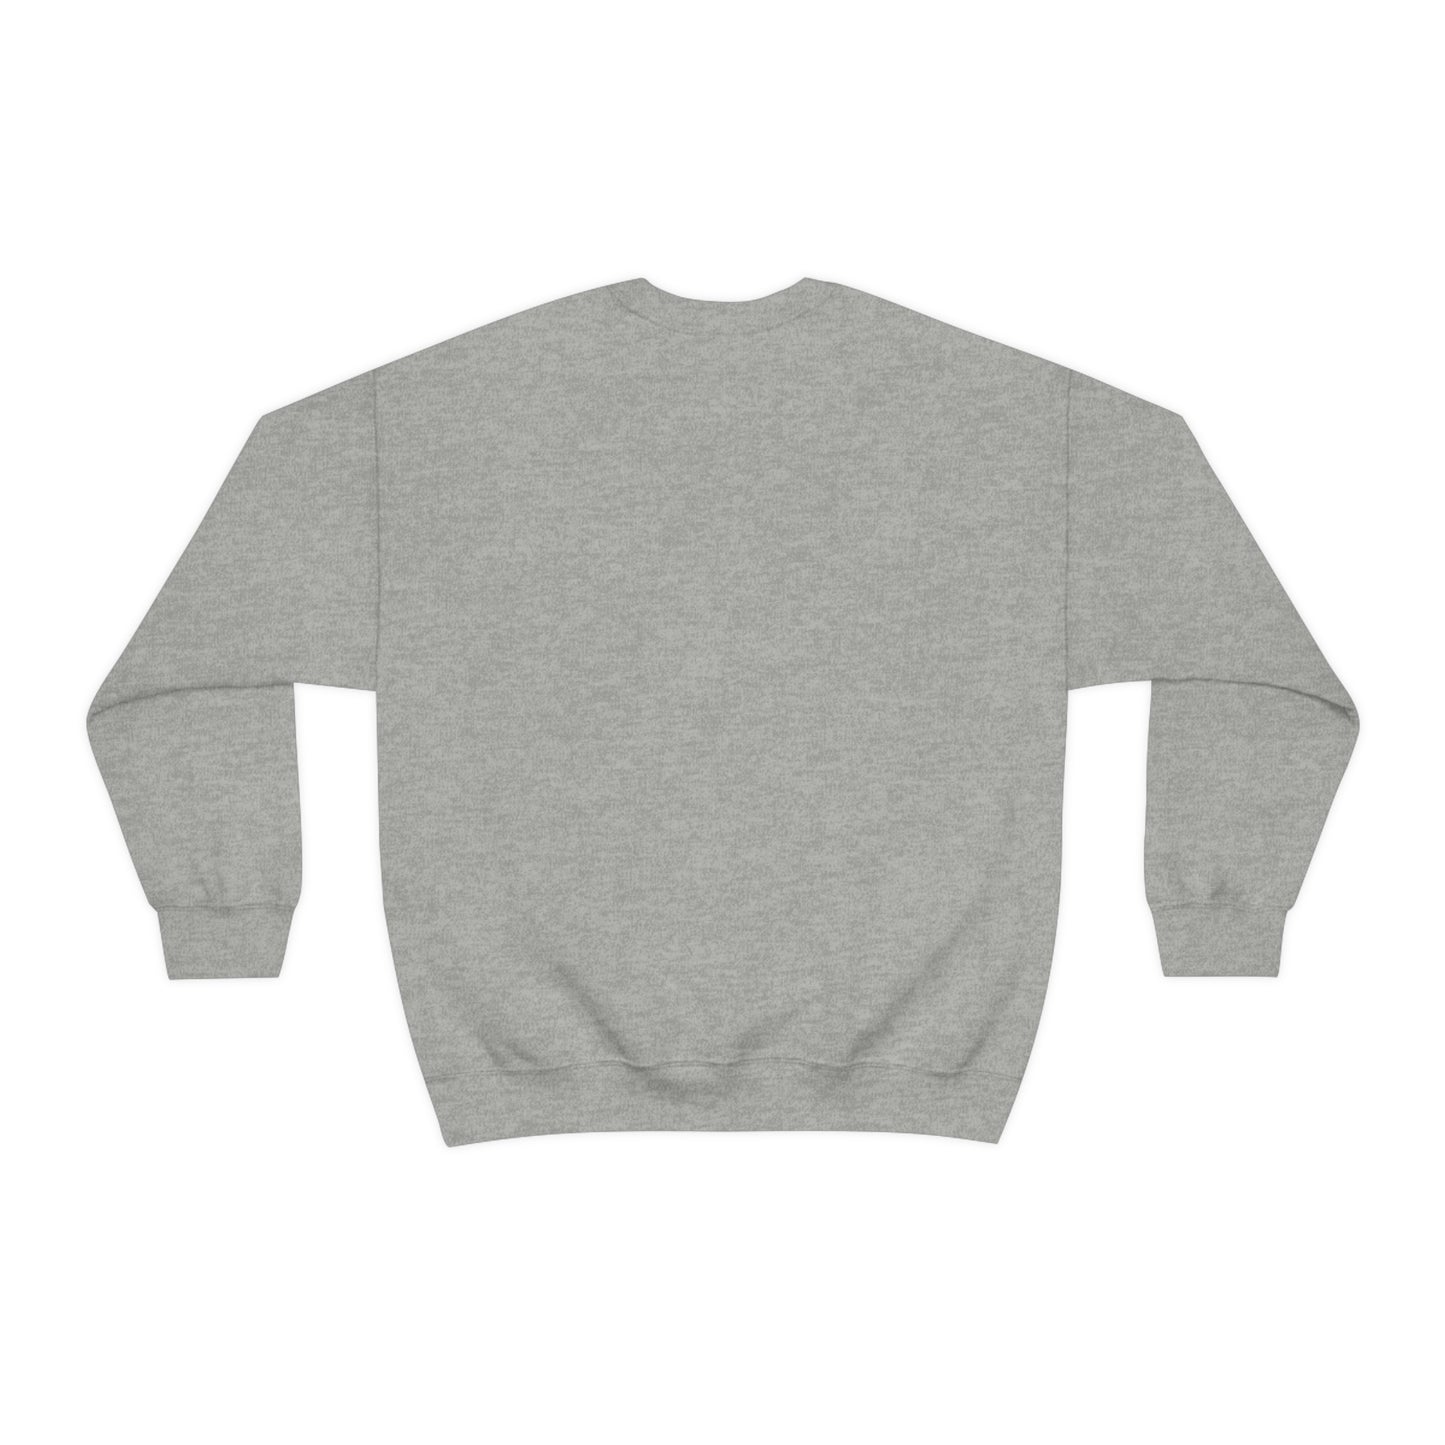 Gym Capybara - Unisex Sweatshirt